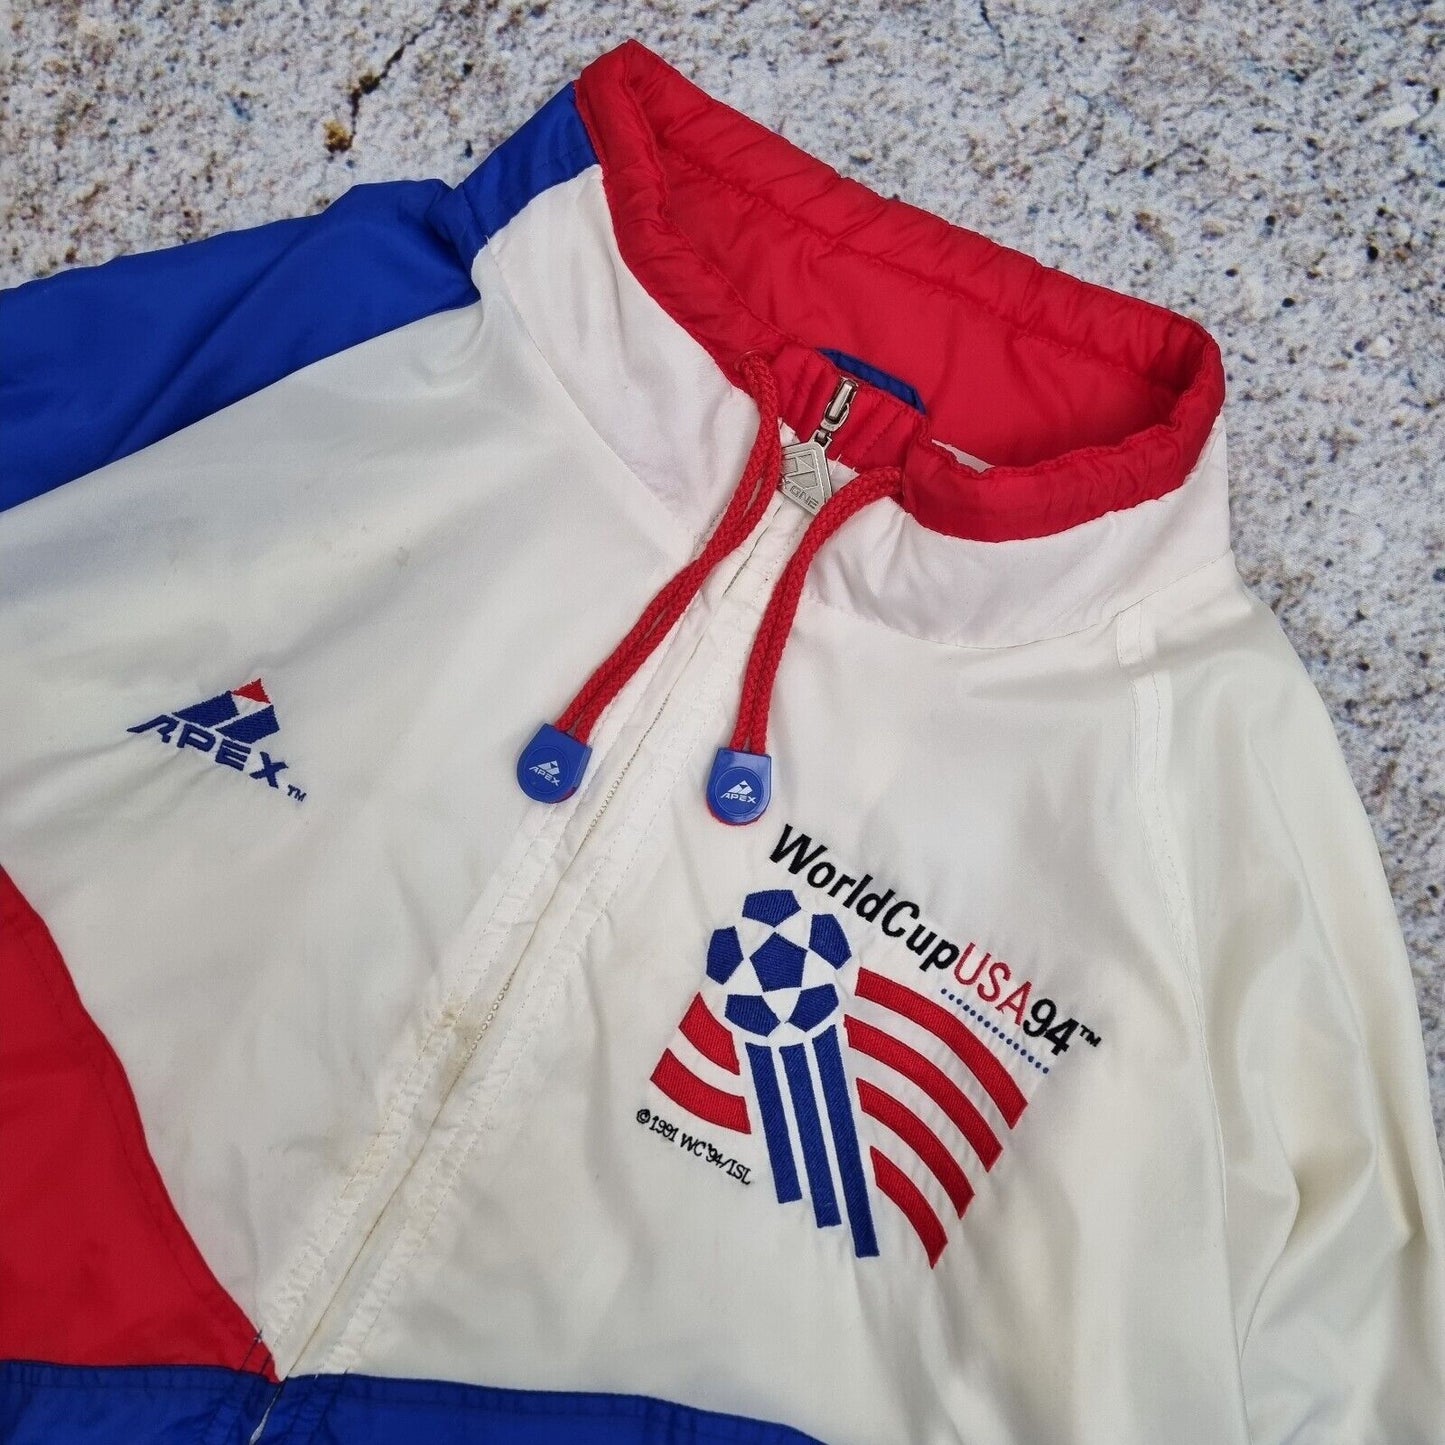 Apex World Cup USA 94  One Jacket Windbreaker Vintage Size XL